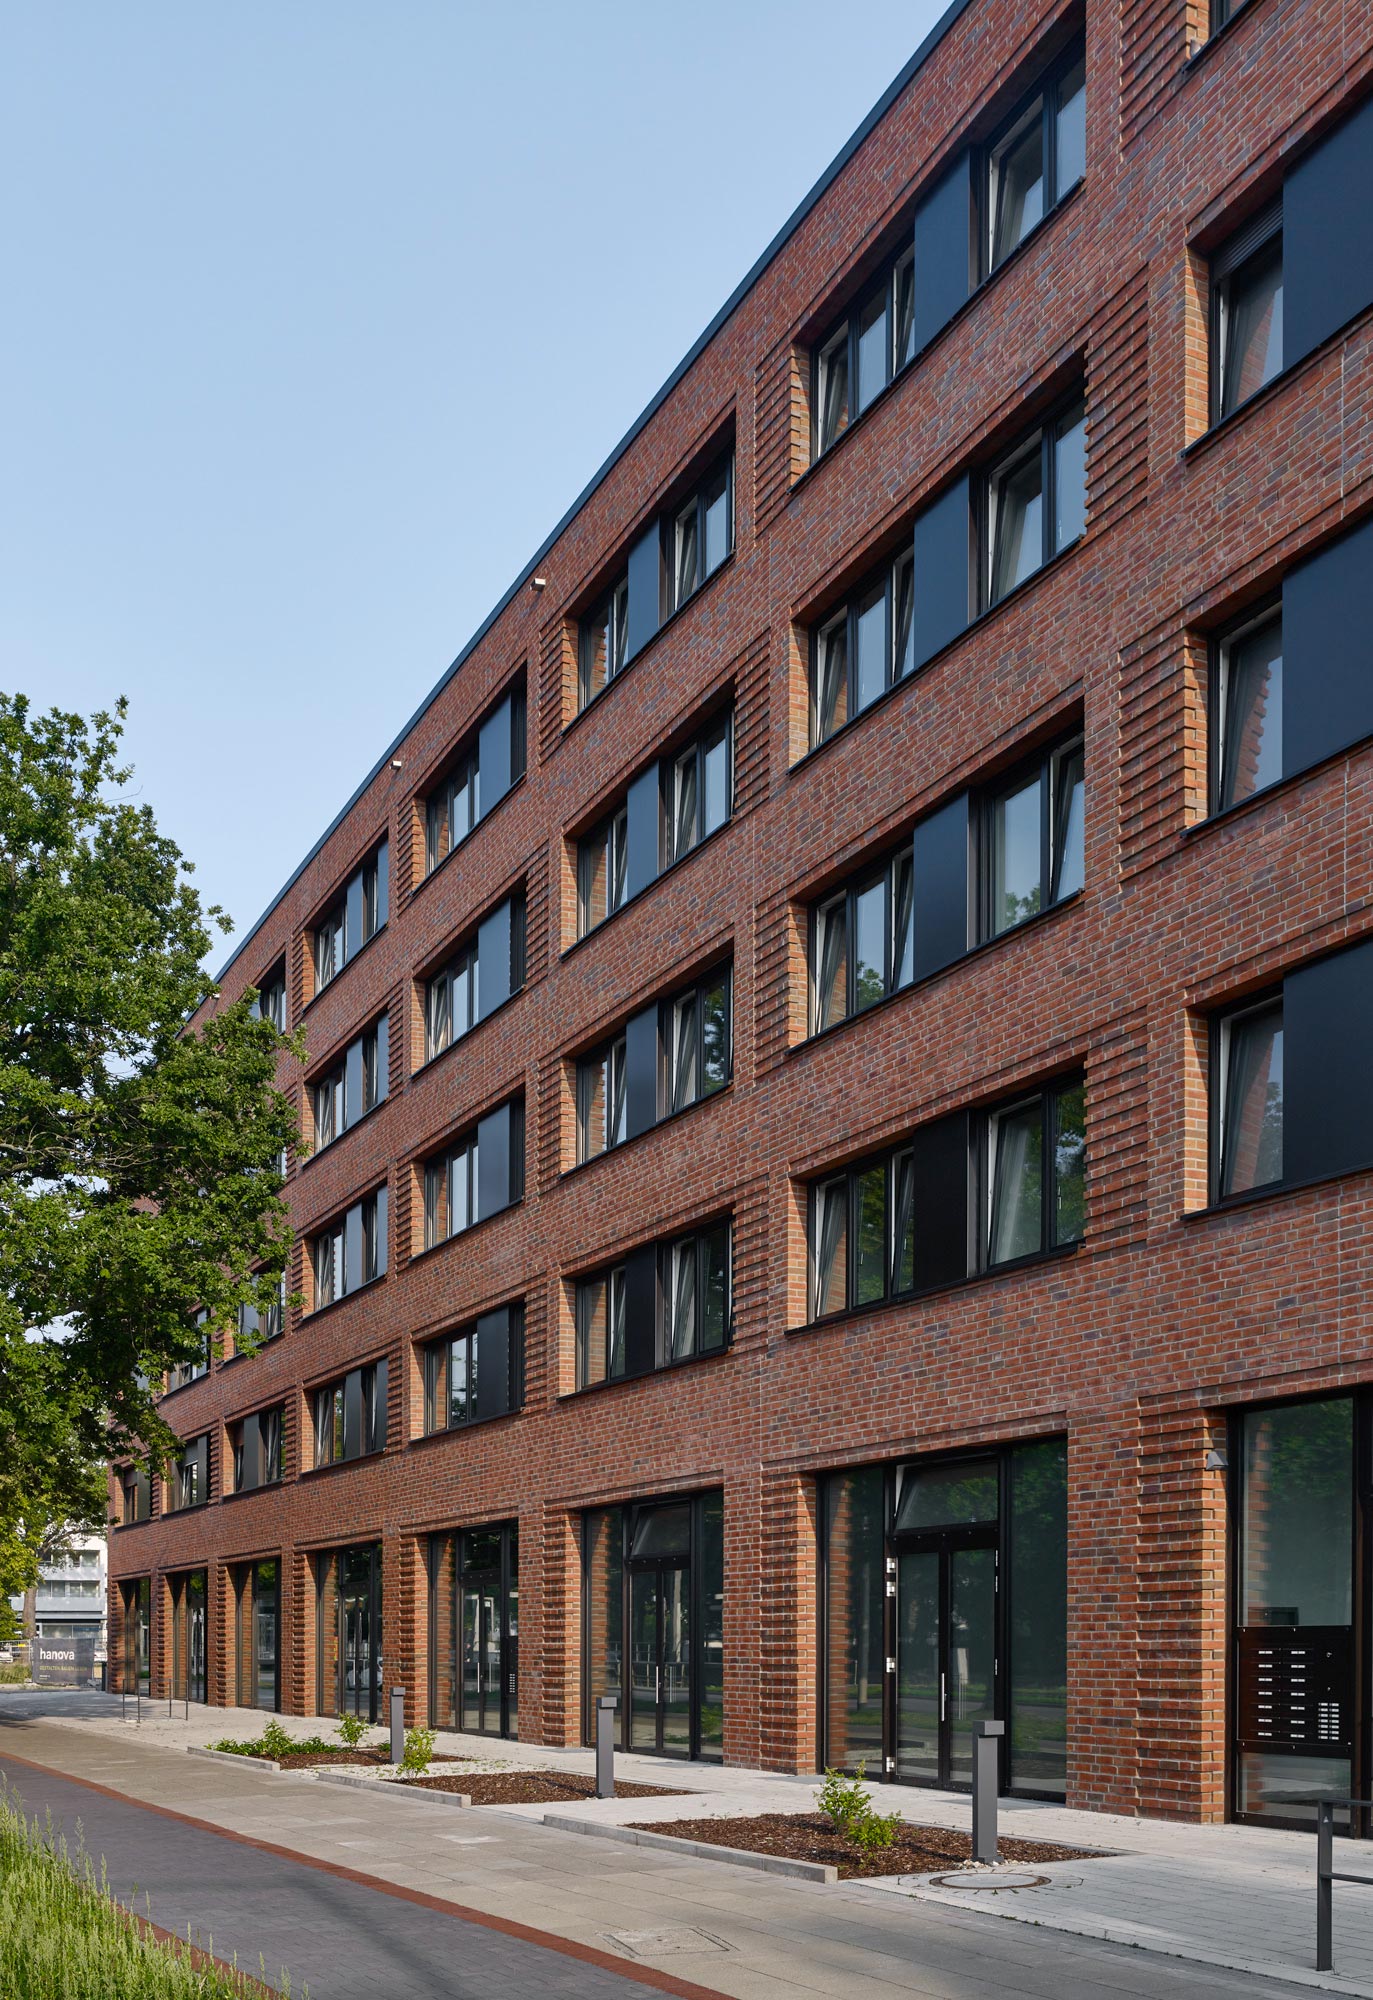 Büro- und Wohngebäude Podbielskistraße in Hannover, Foto: Stefan Müller